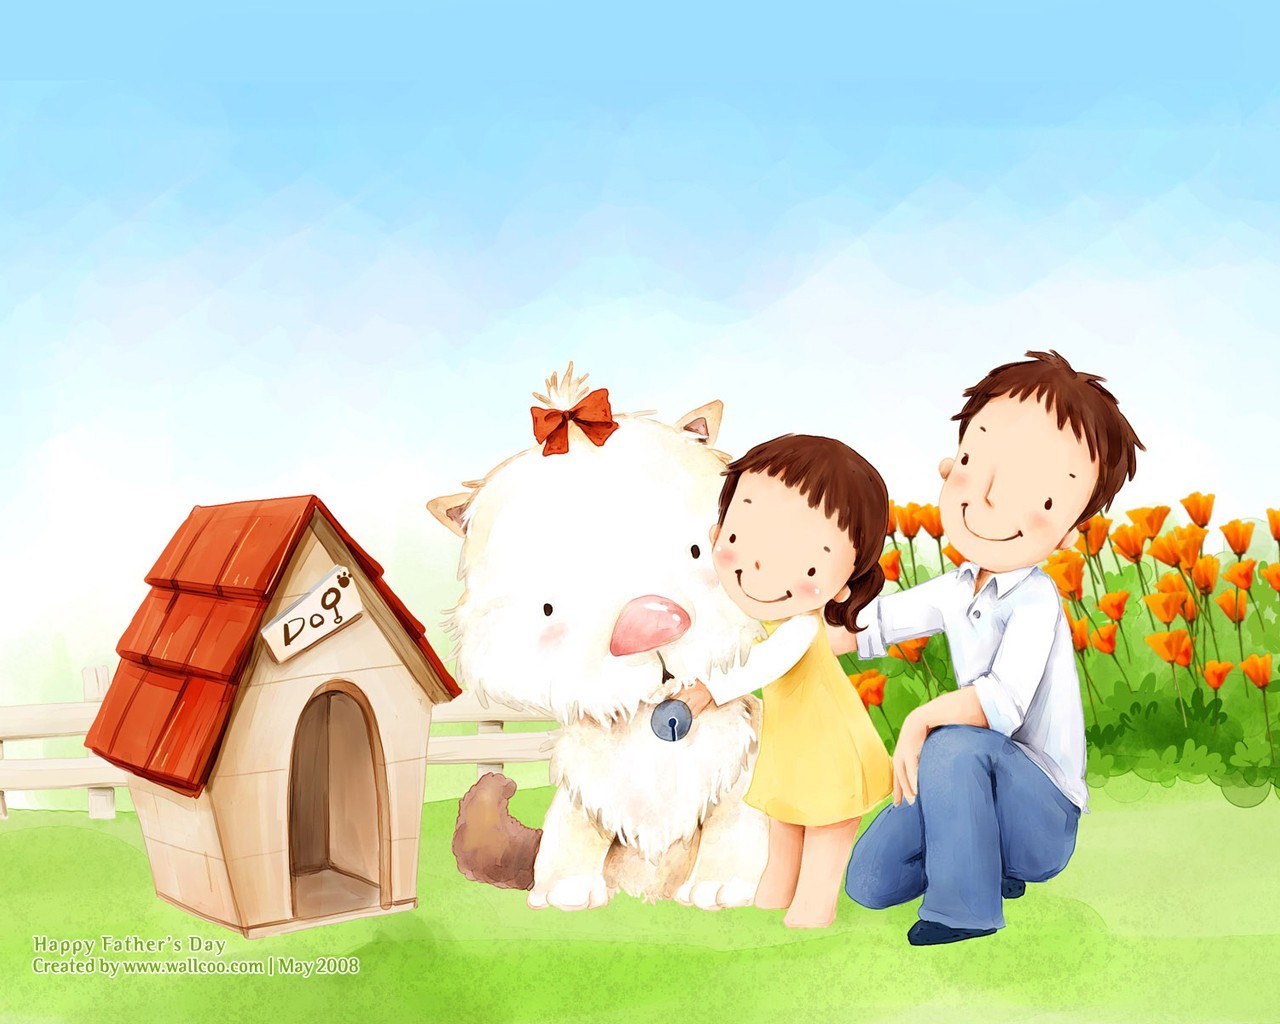 Father's Day theme of South Korean illustrator wallpaper #4 - 1280x1024